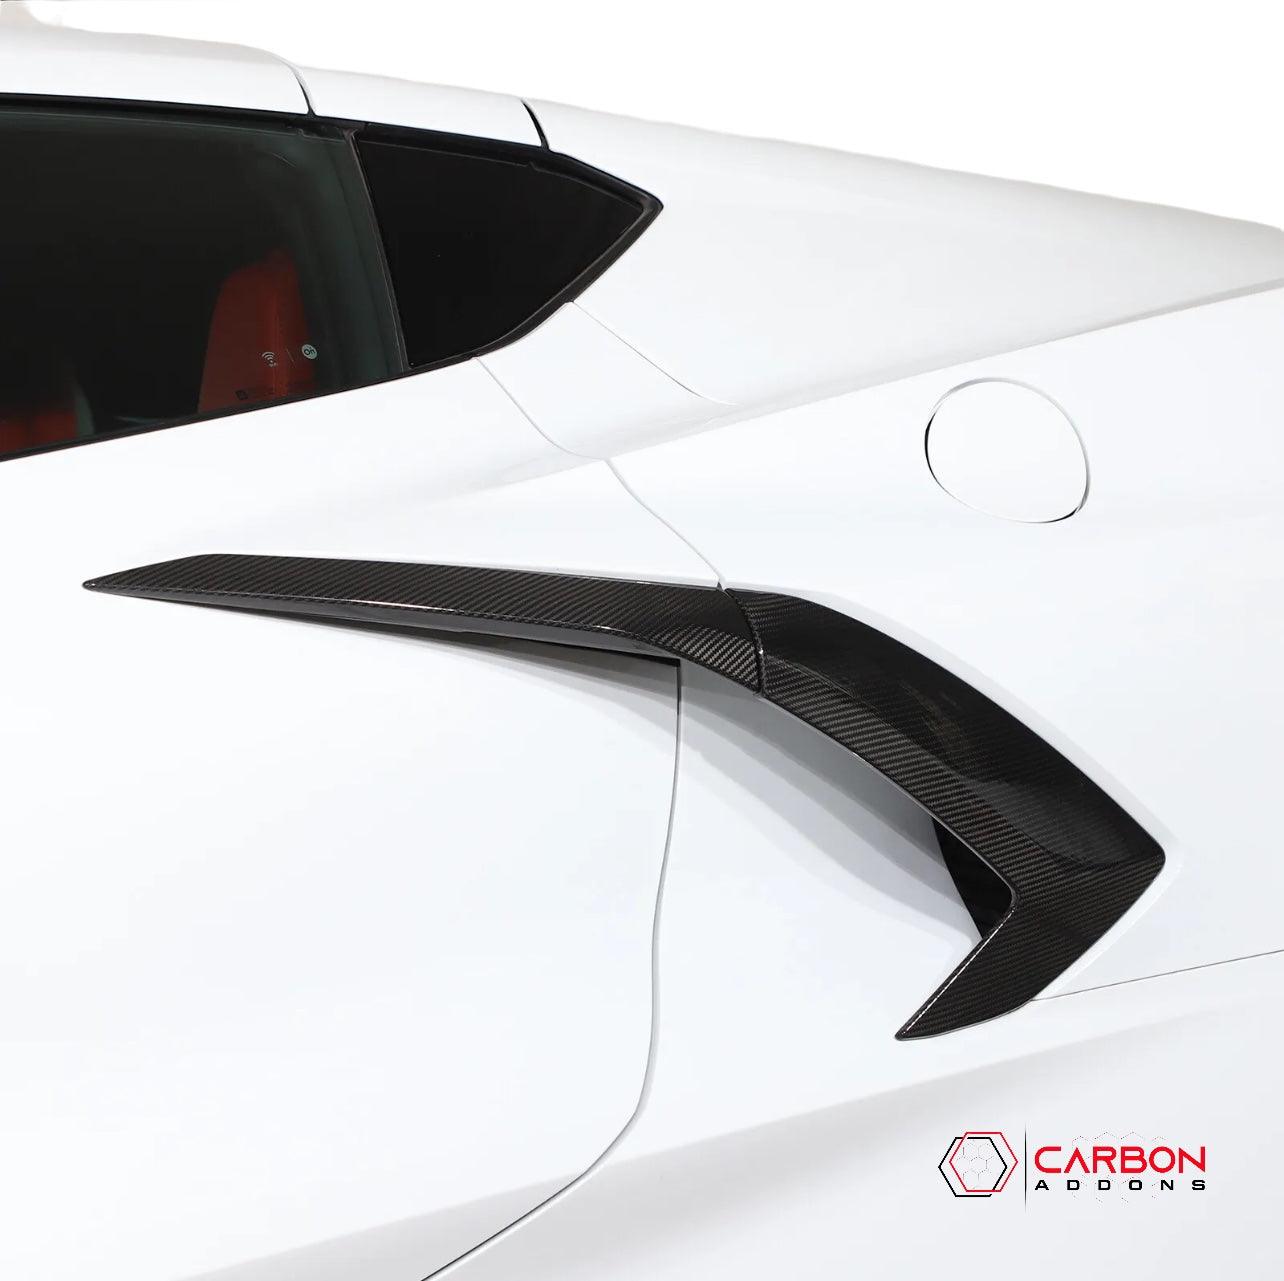 C8 Corvette Exterior Side Scoop Boomerang Trim Carbon Fiber Cover Set - carbonaddons Carbon Fiber Parts, Accessories, Upgrades, Mods